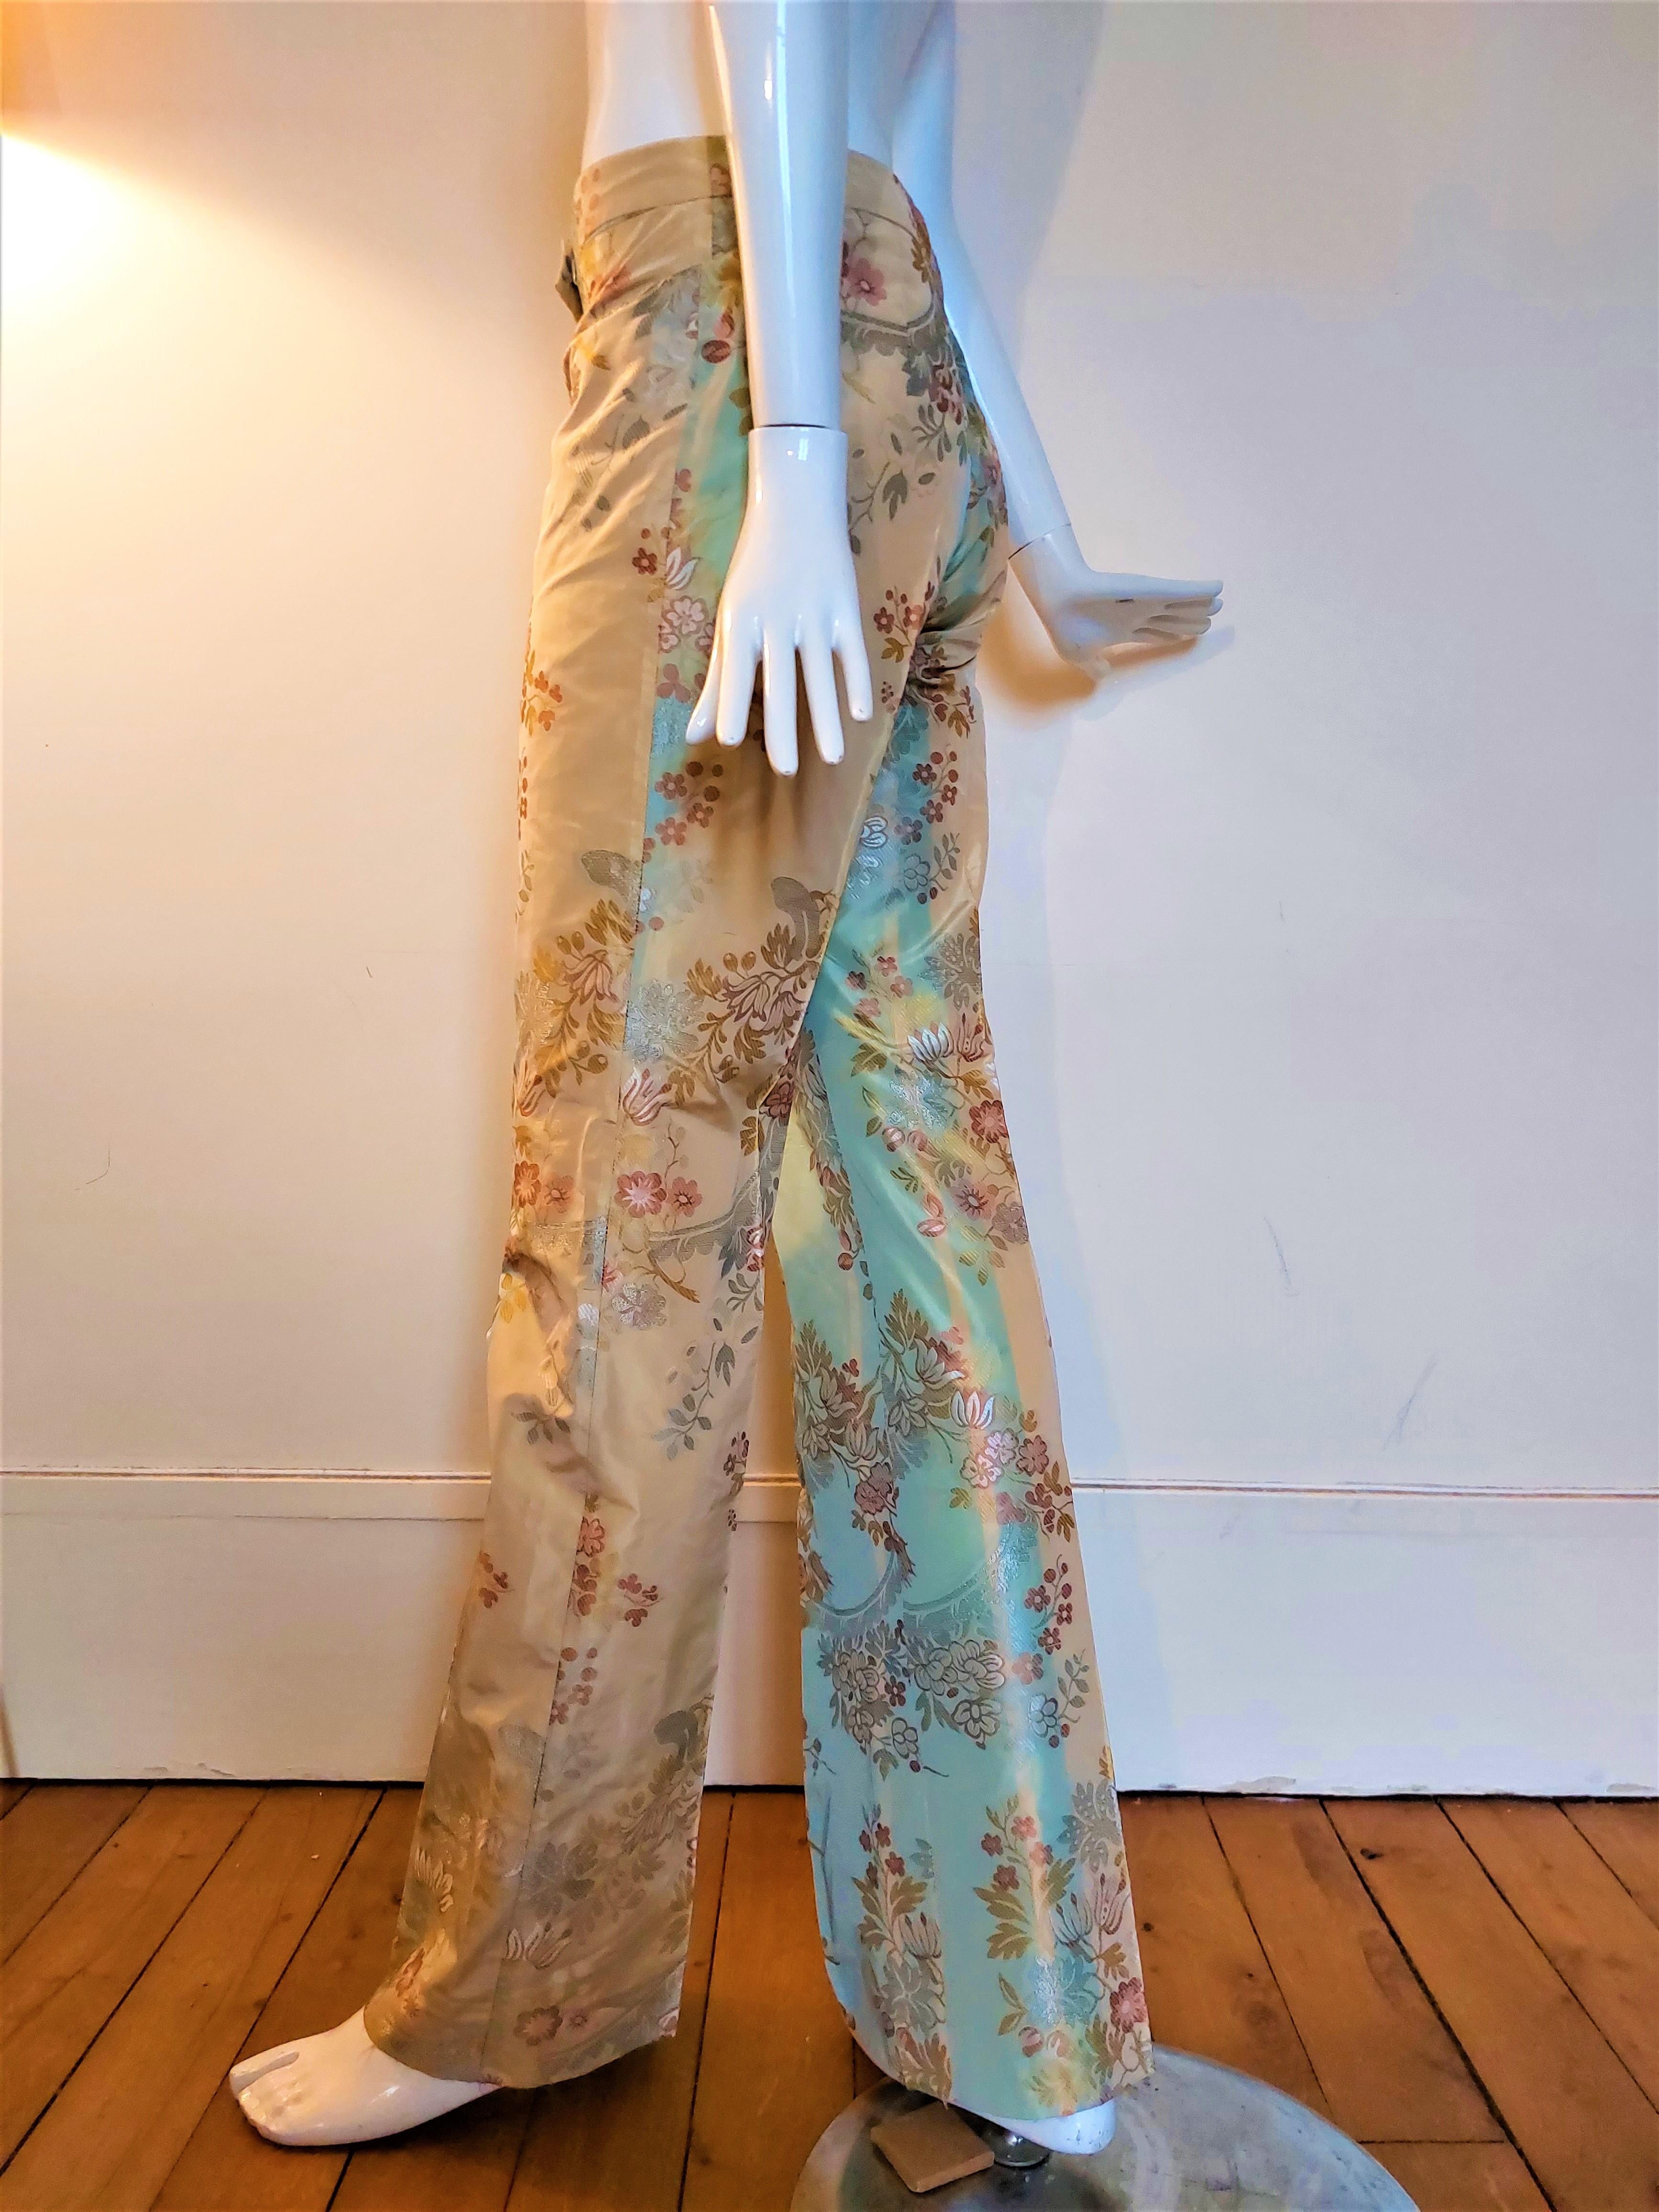 Alexander Mcqueen - Costume pantalon de pirate en brocart de soie « Shipwreck », années 2000 en vente 15